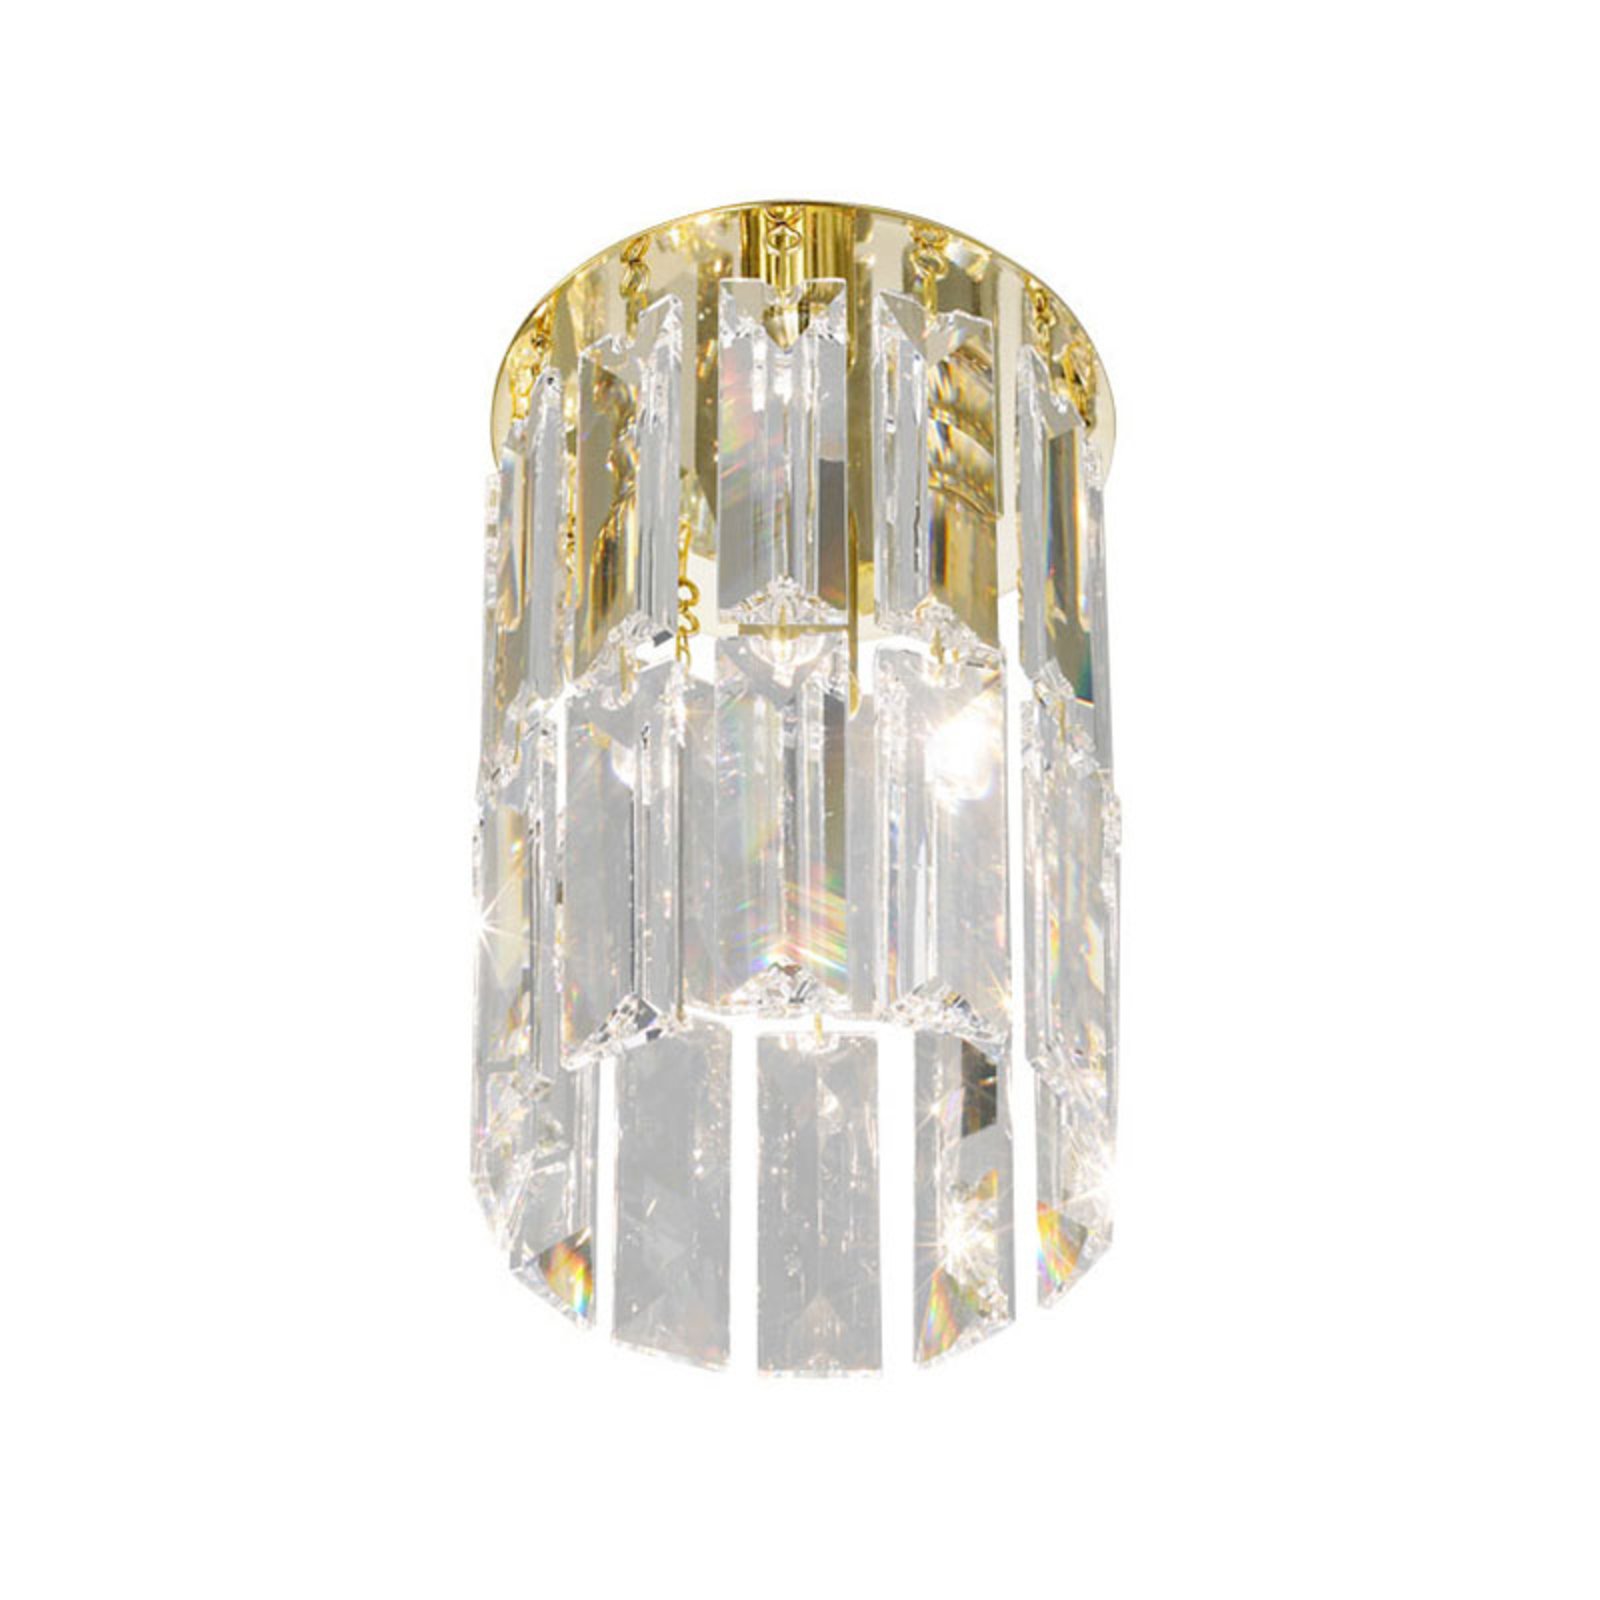 KOLARZ Prisma loftlampe, krystal og guld 24 kt